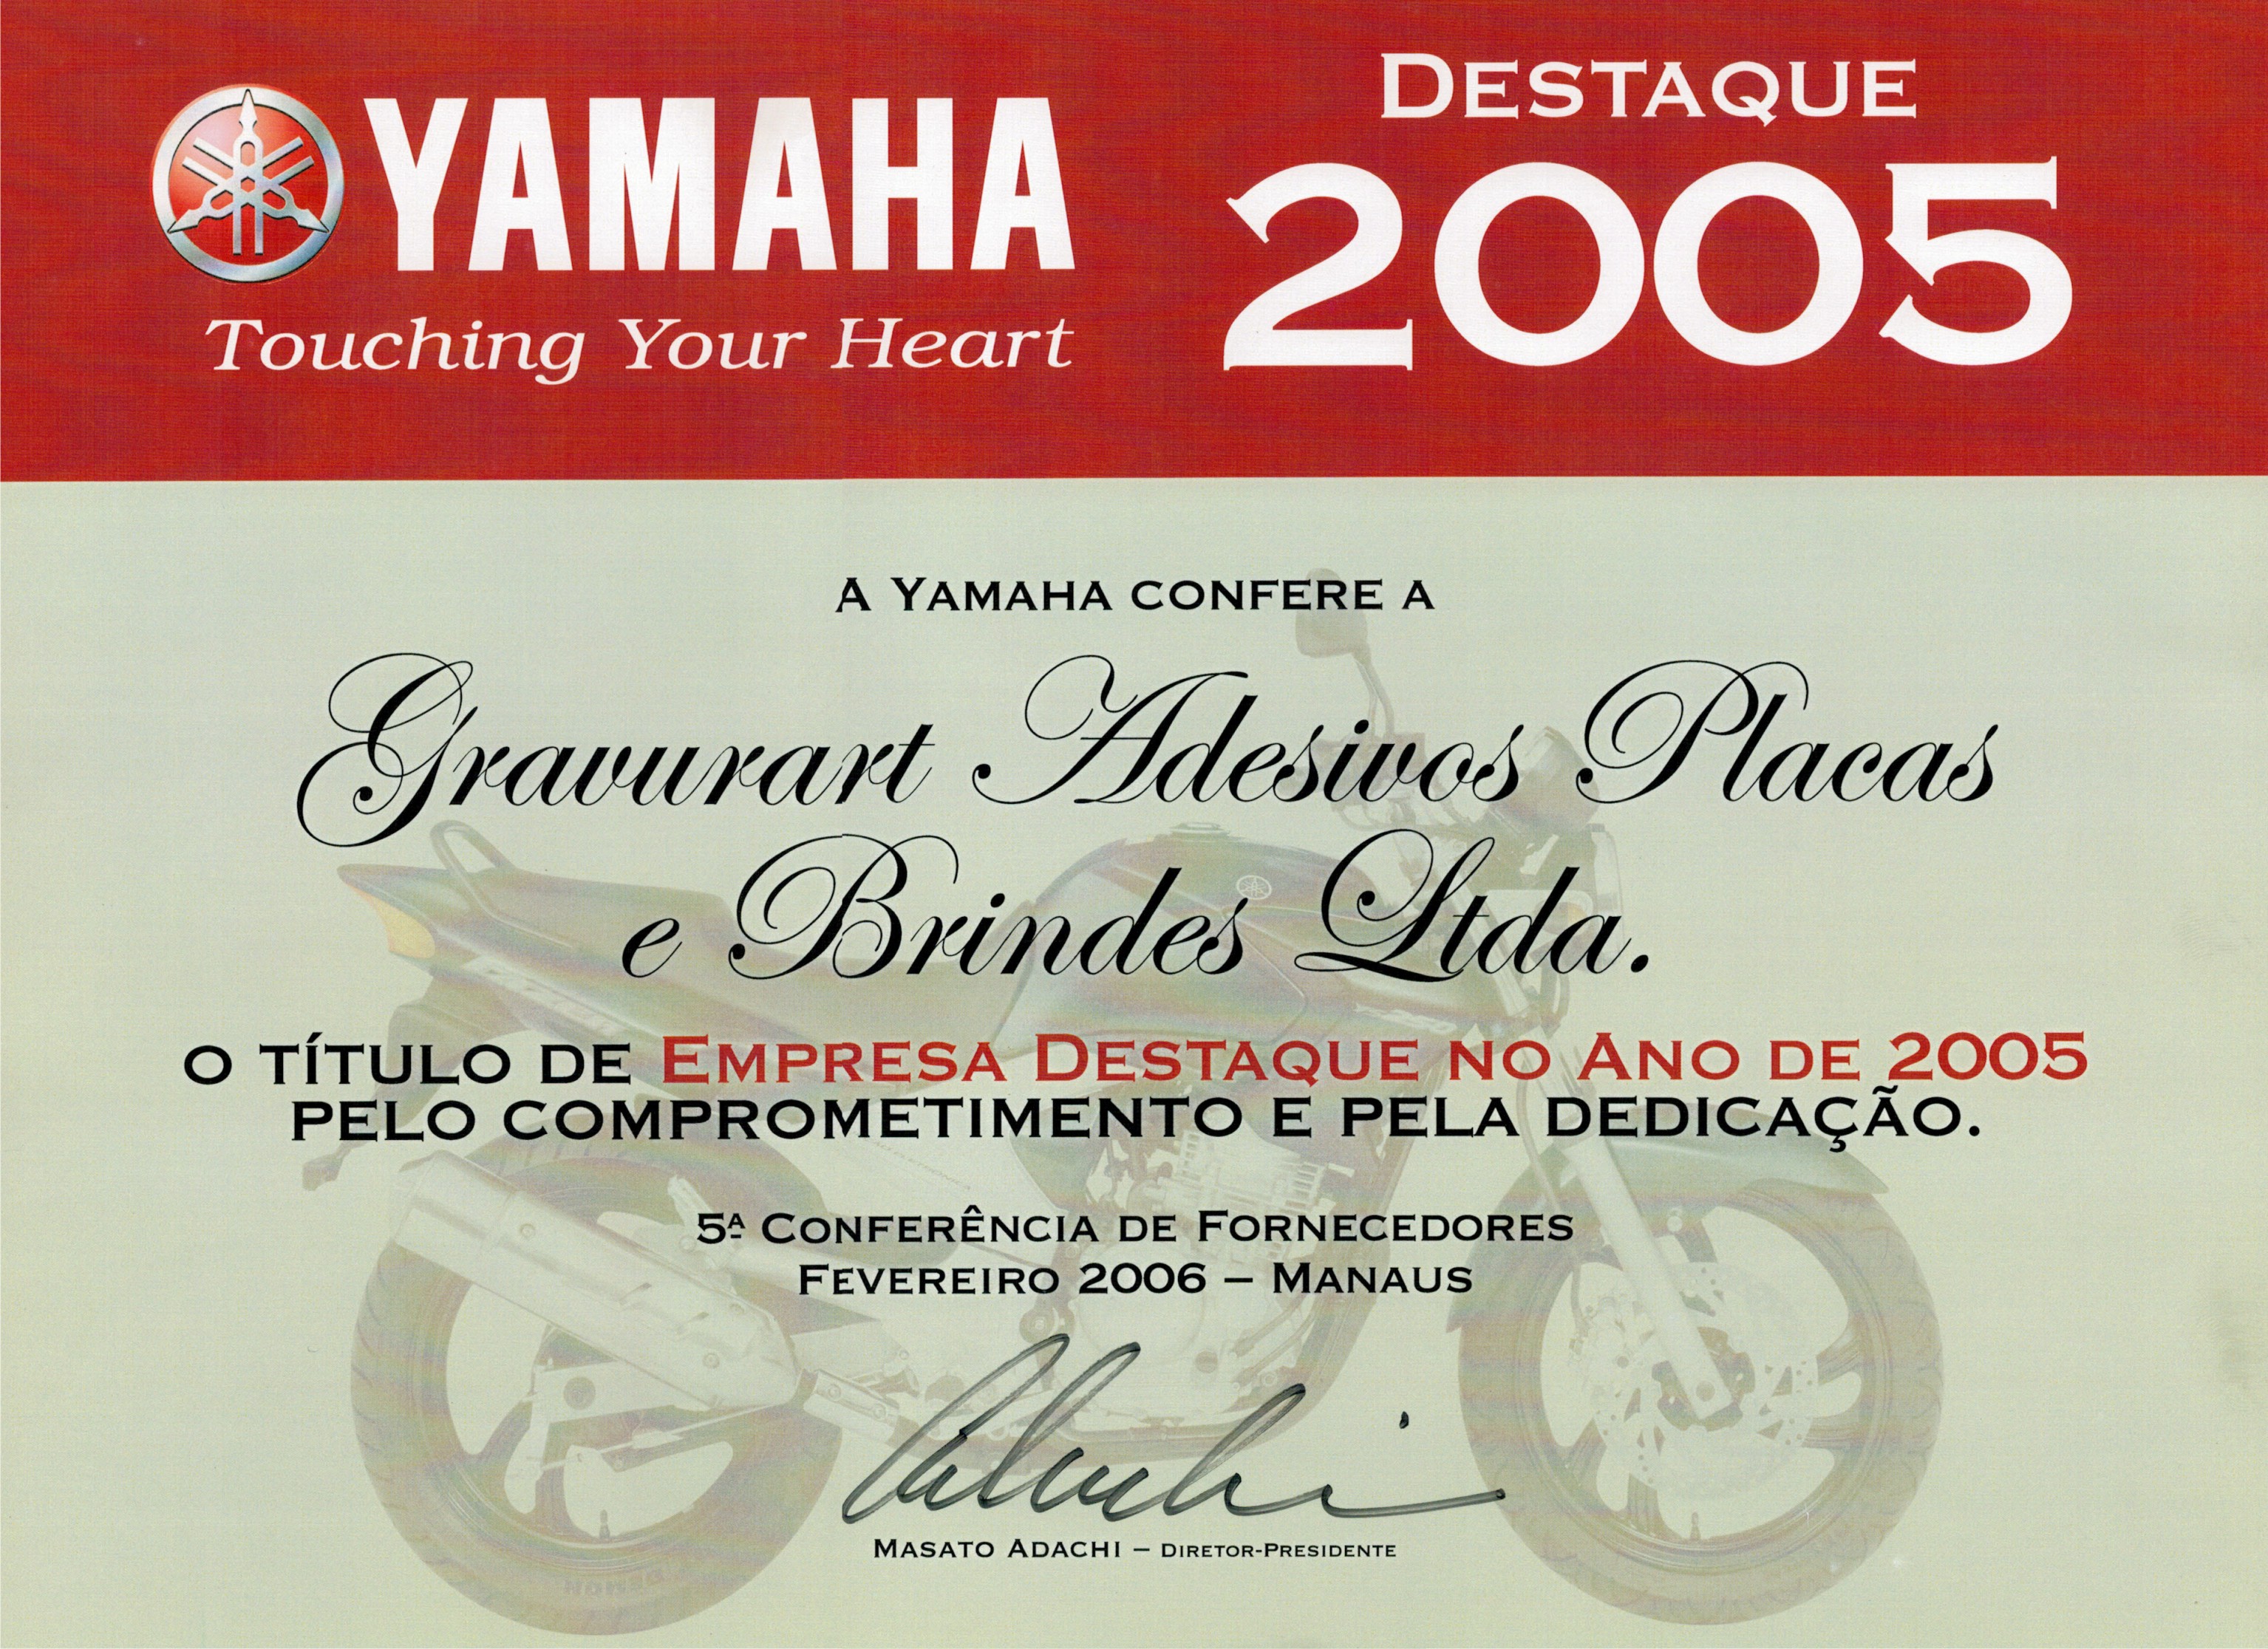 Premio Destaque de 2005 Yamaha